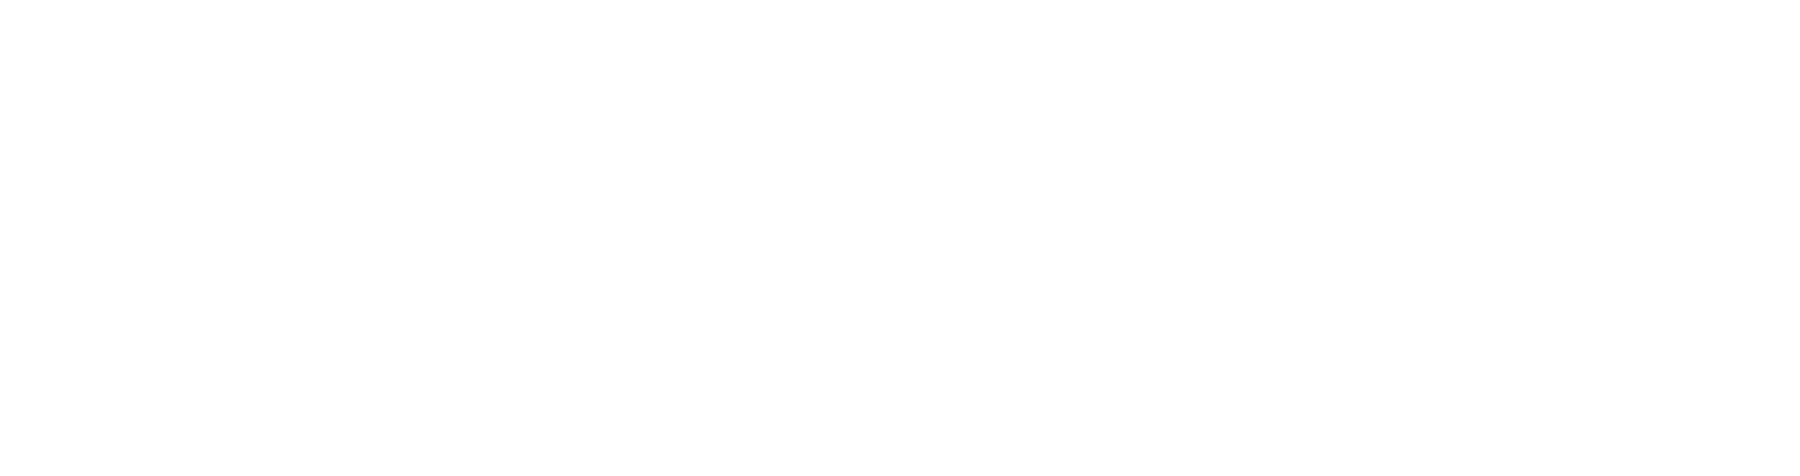 Barefoot Contessa logo